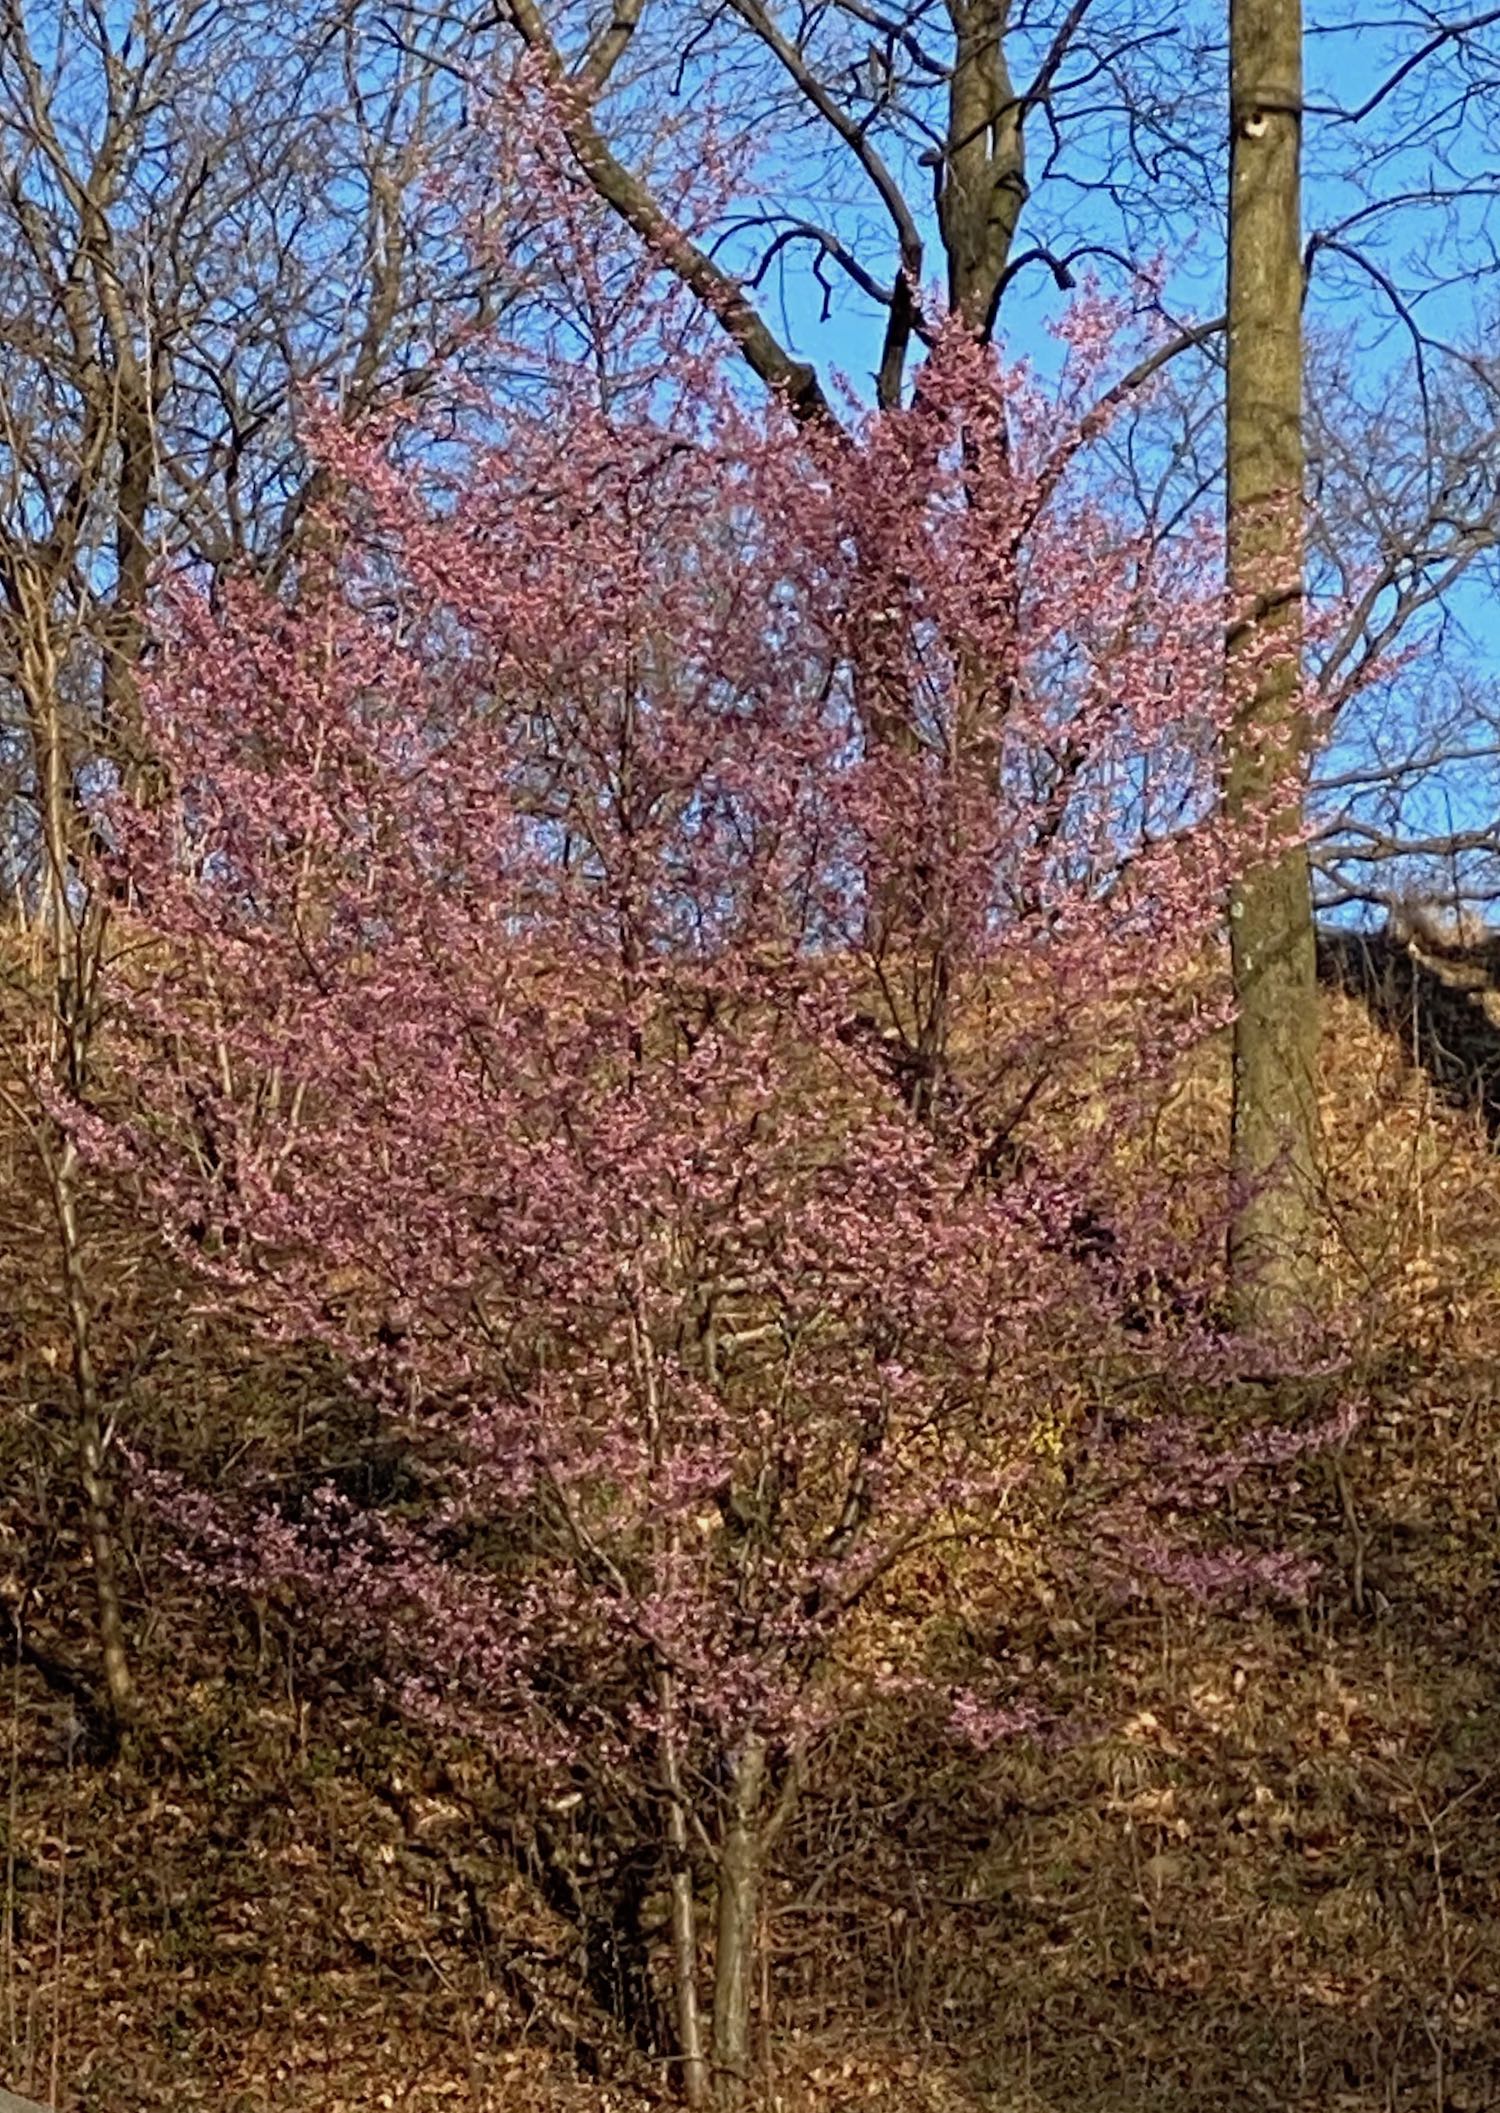 Pink Flowering Tree in Green-Wood Cemetery, Brooklyn NY